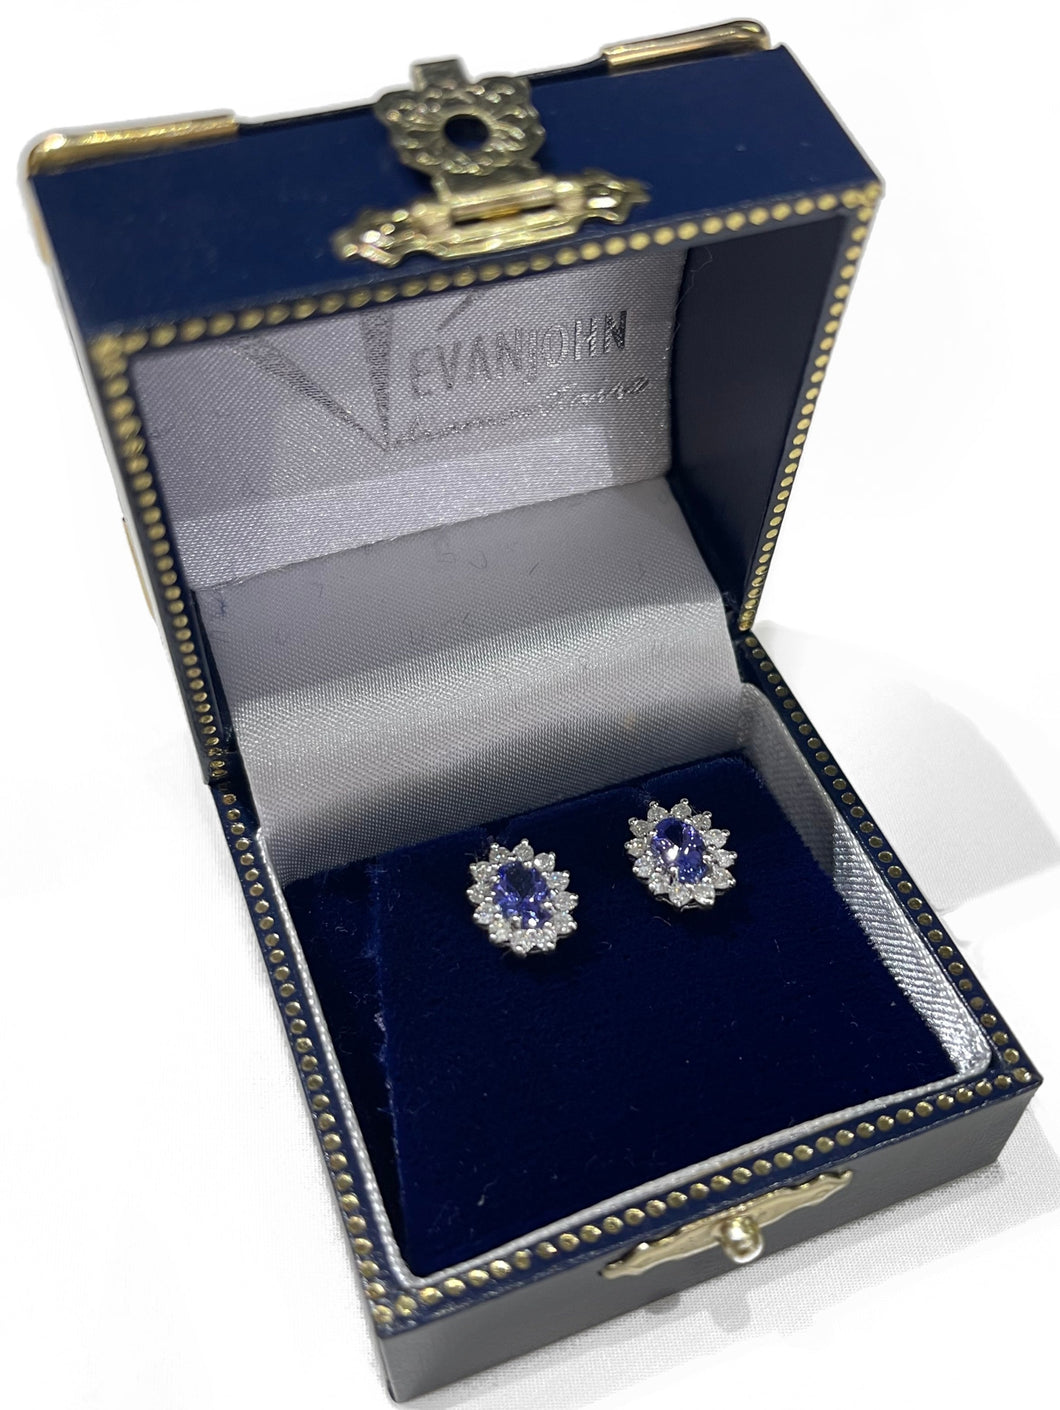 Tanzanite and Diamond Stud Earrings